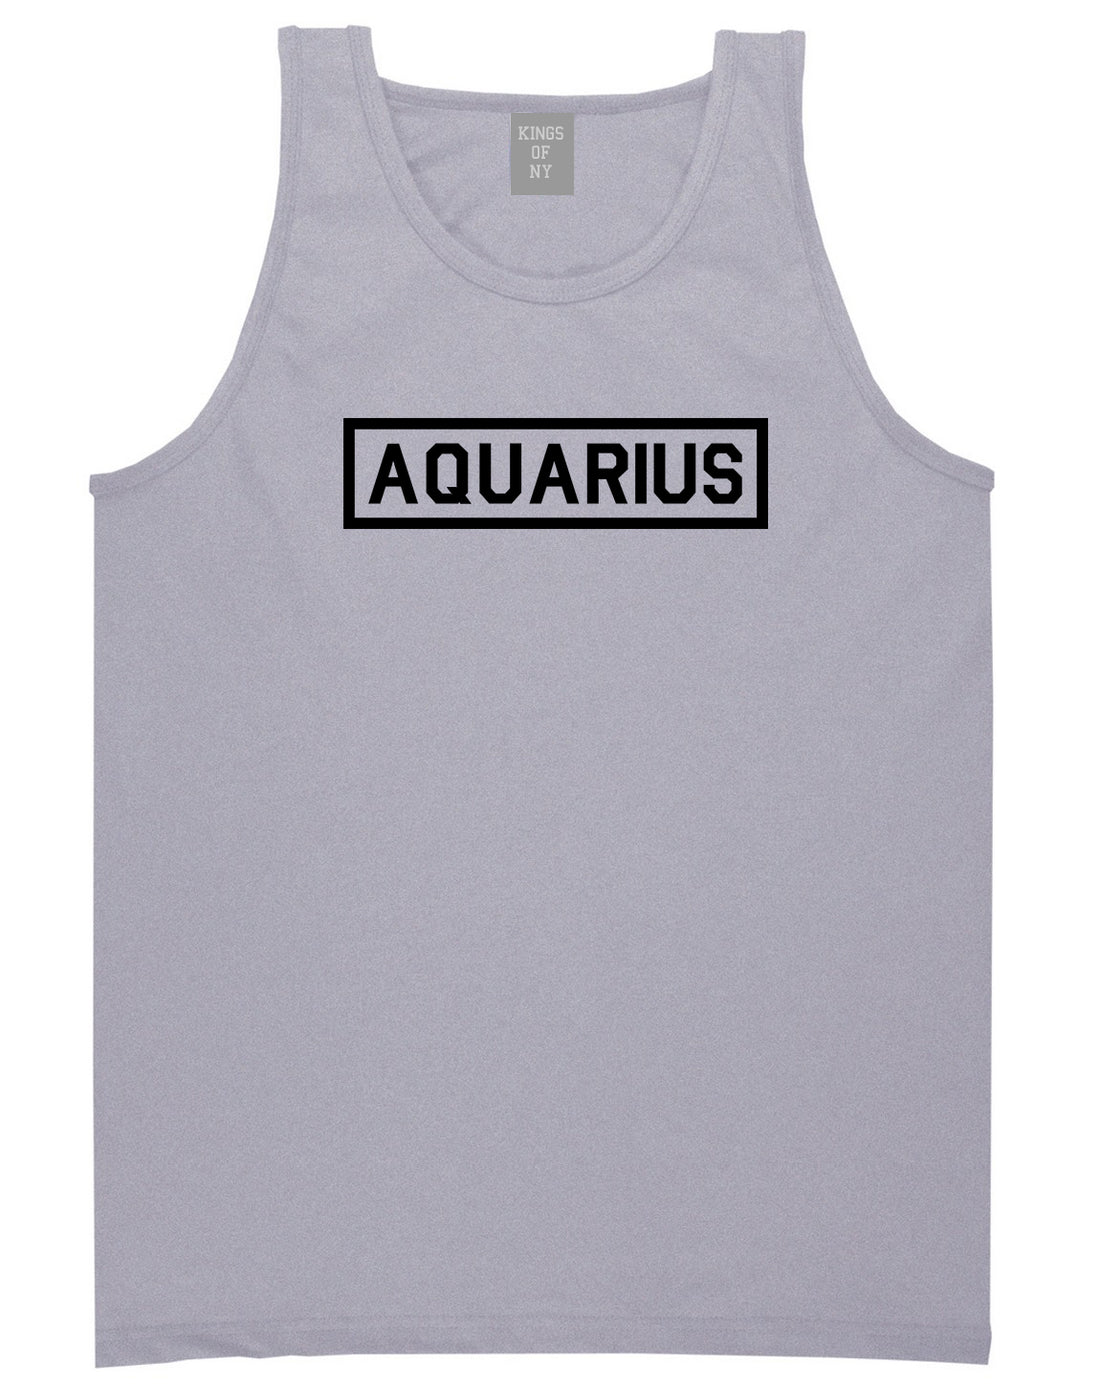 Aquarius Horoscope Sign Mens Grey Tank Top Shirt by KINGS OF NY